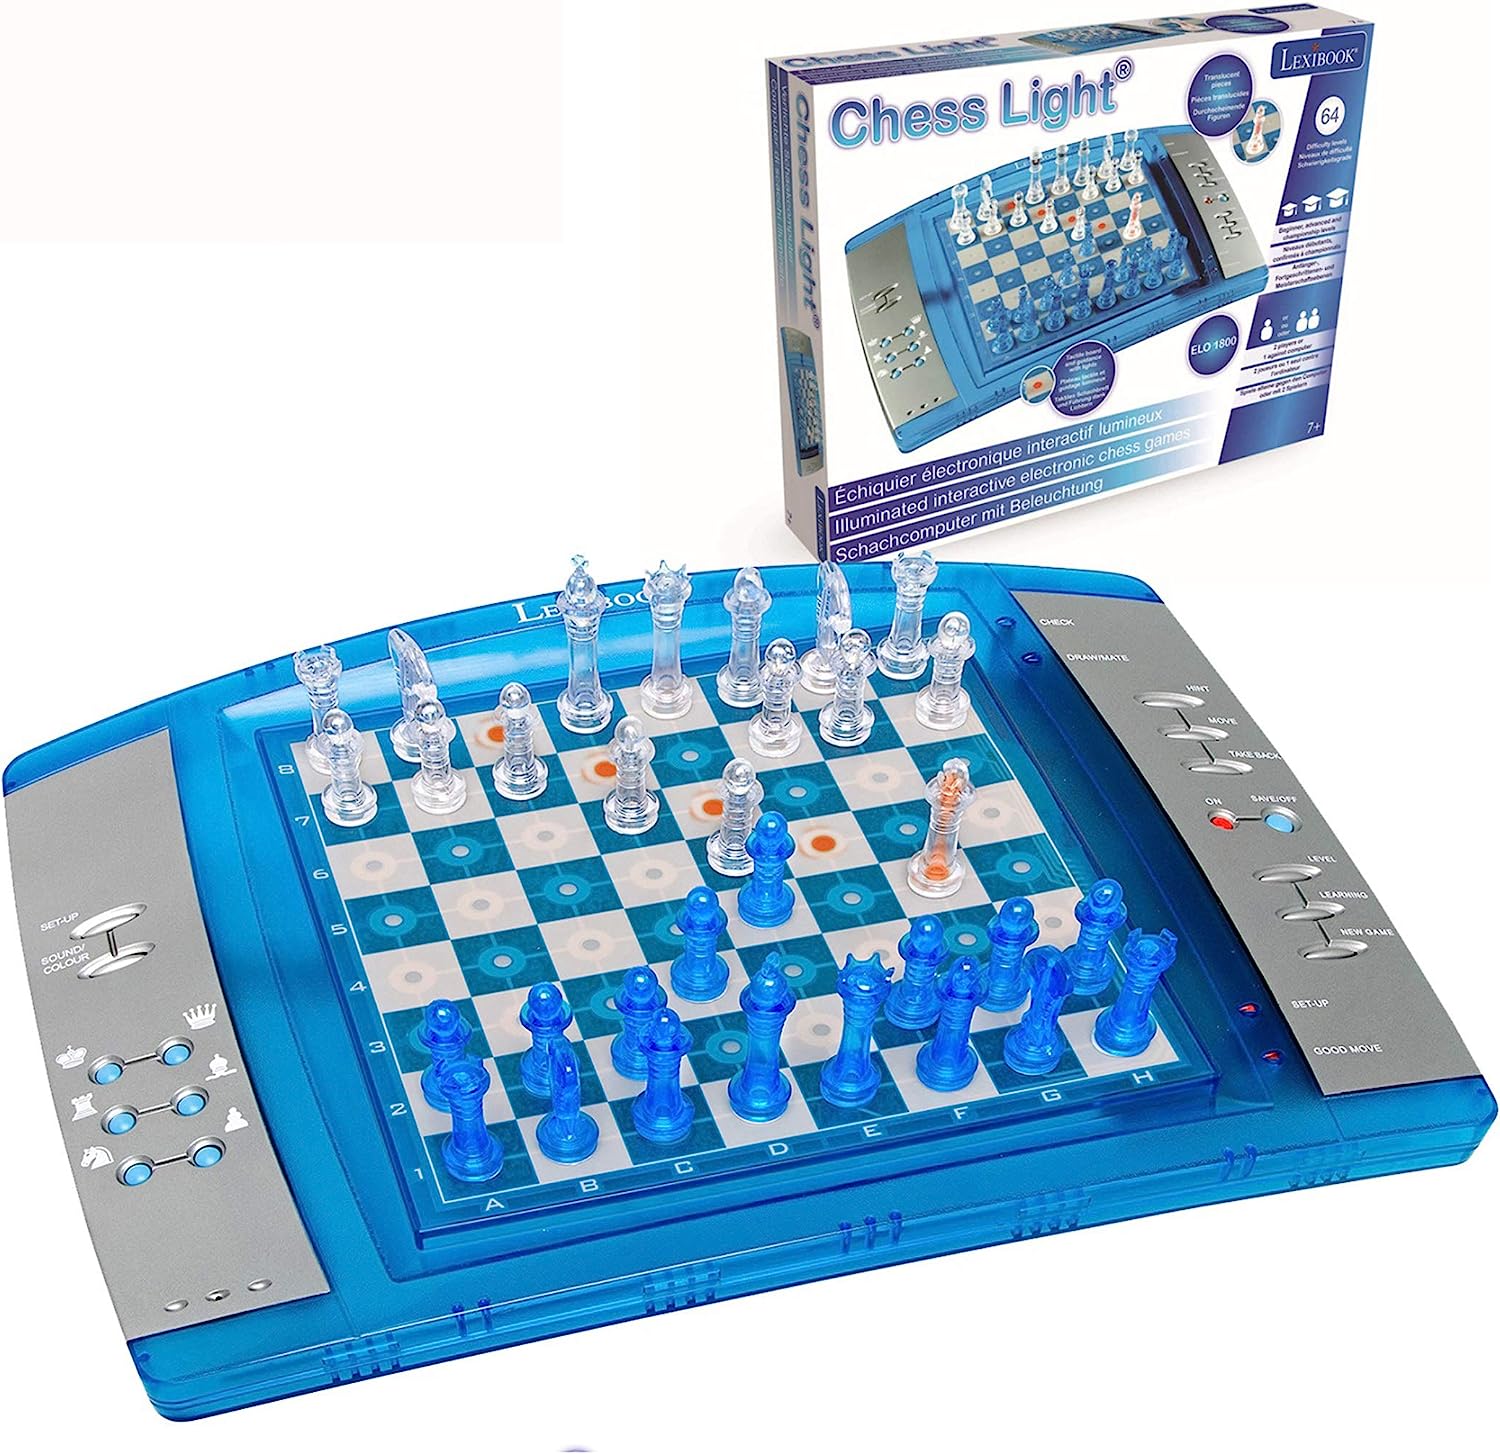 Ver categoría de ajedrez electrónico lexibook lcg3000